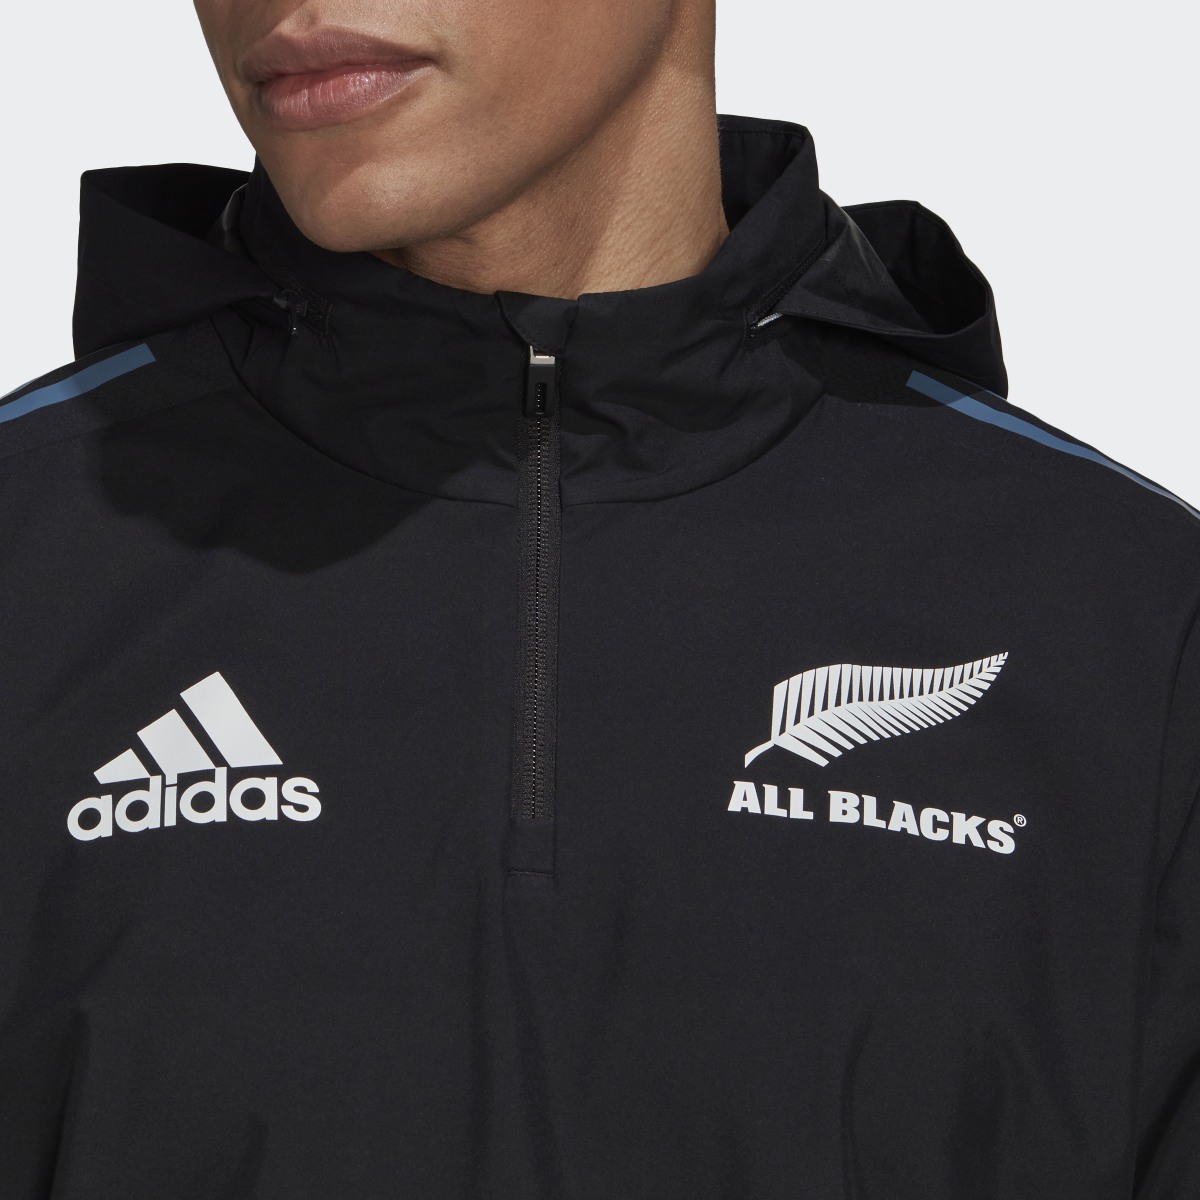 Adidas All Blacks Rugby Windbreaker. 7